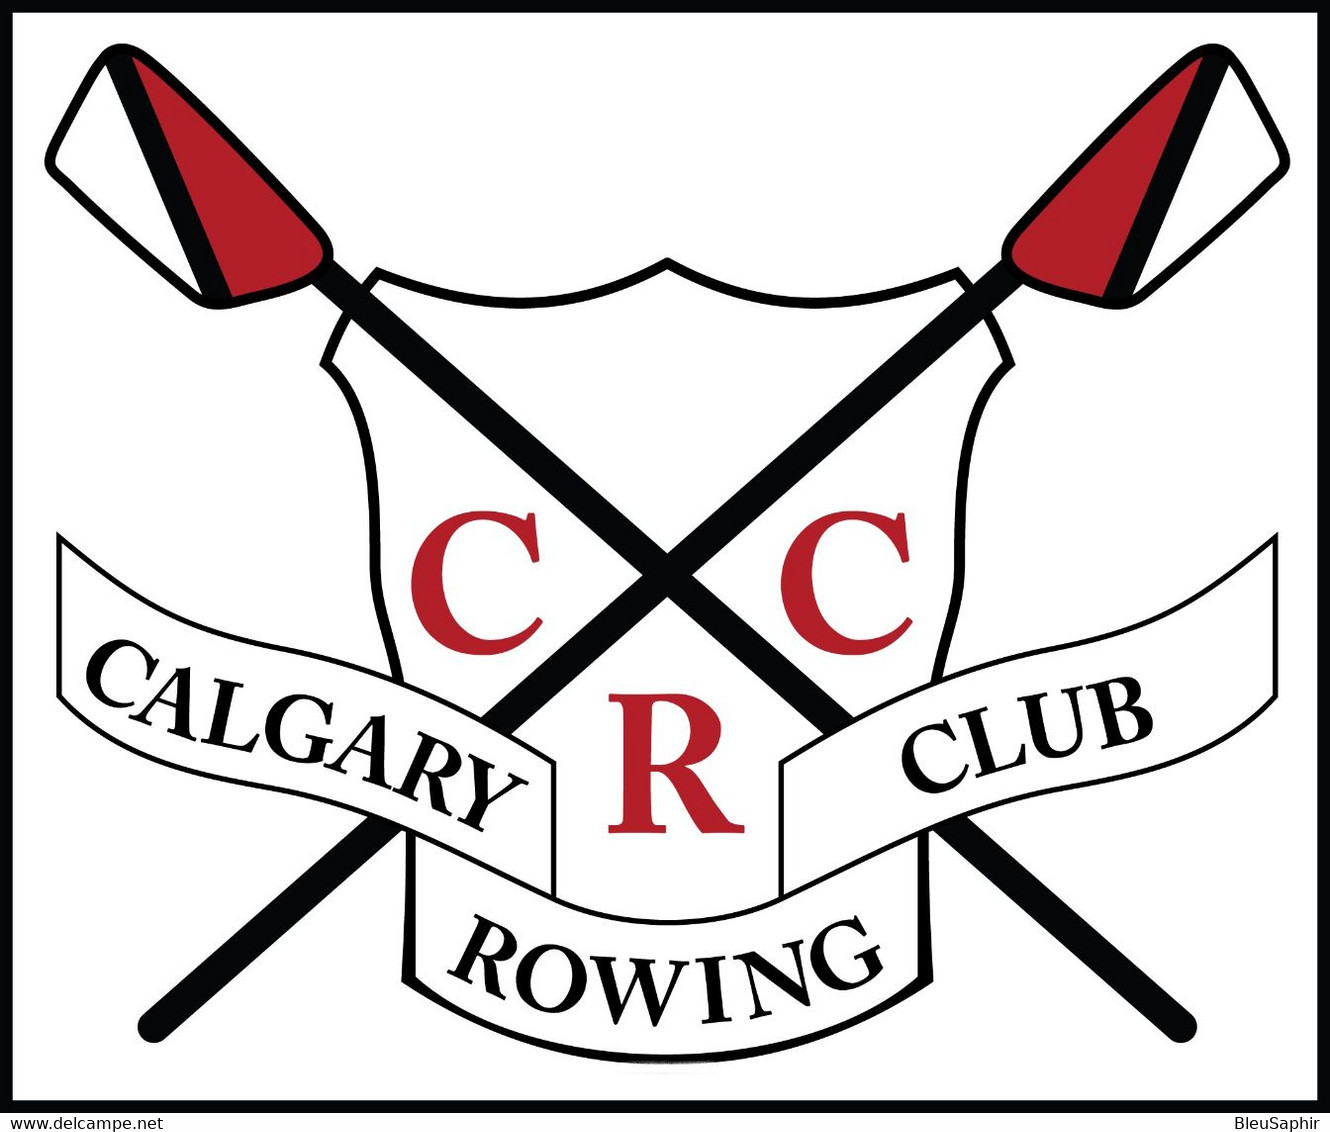 Sticker CAN Calgary RC